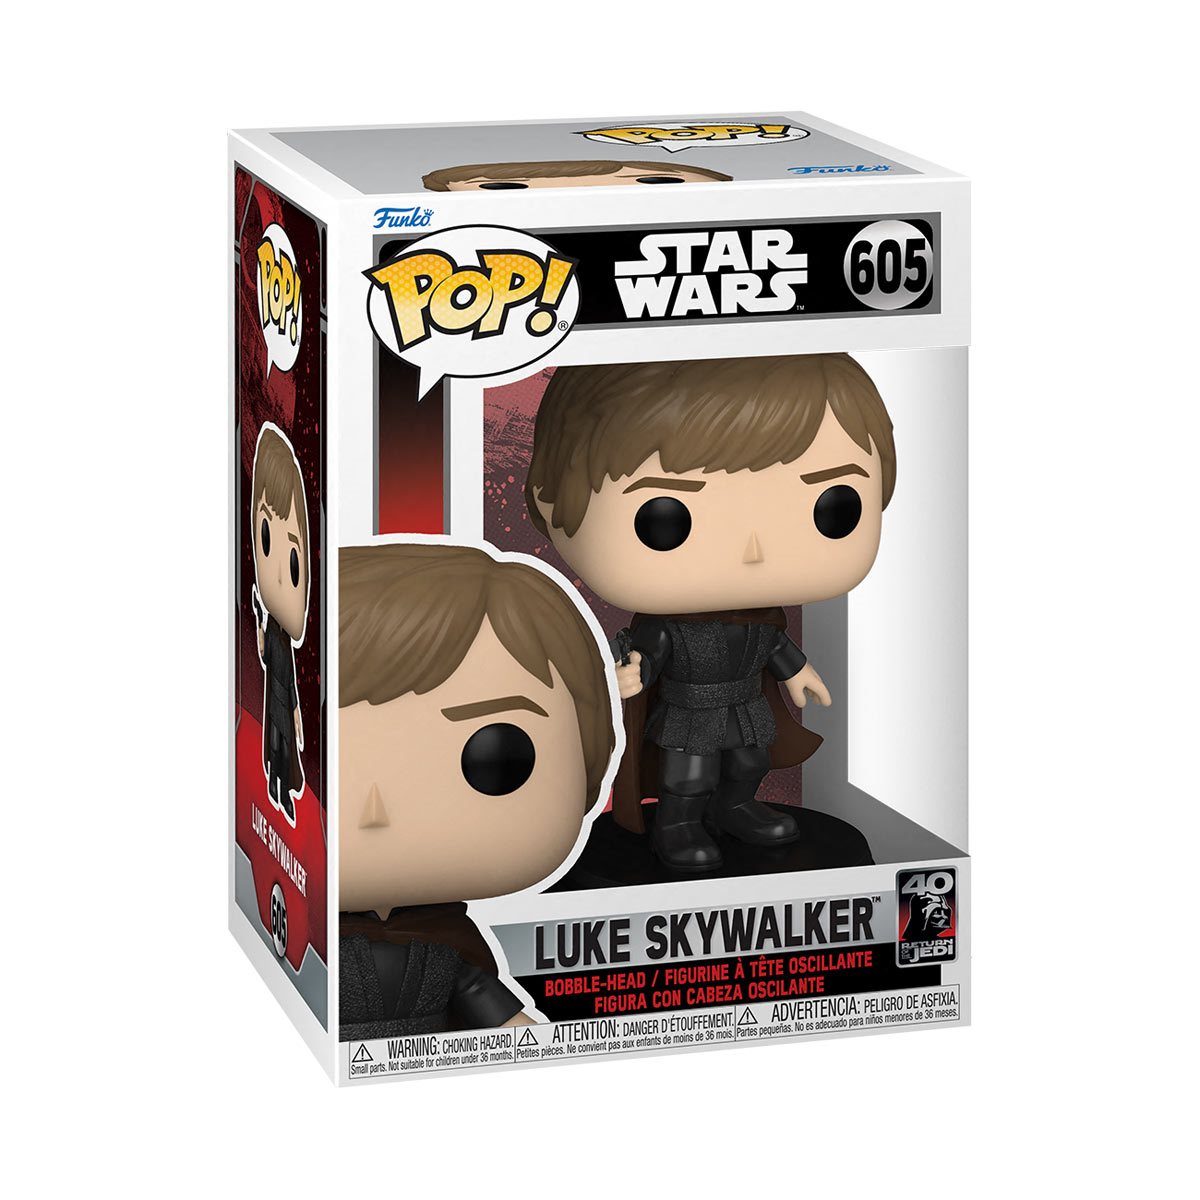 Star Wars: Return of the Jedi 40th Anniversary Luke Skywalker Funko Pop!